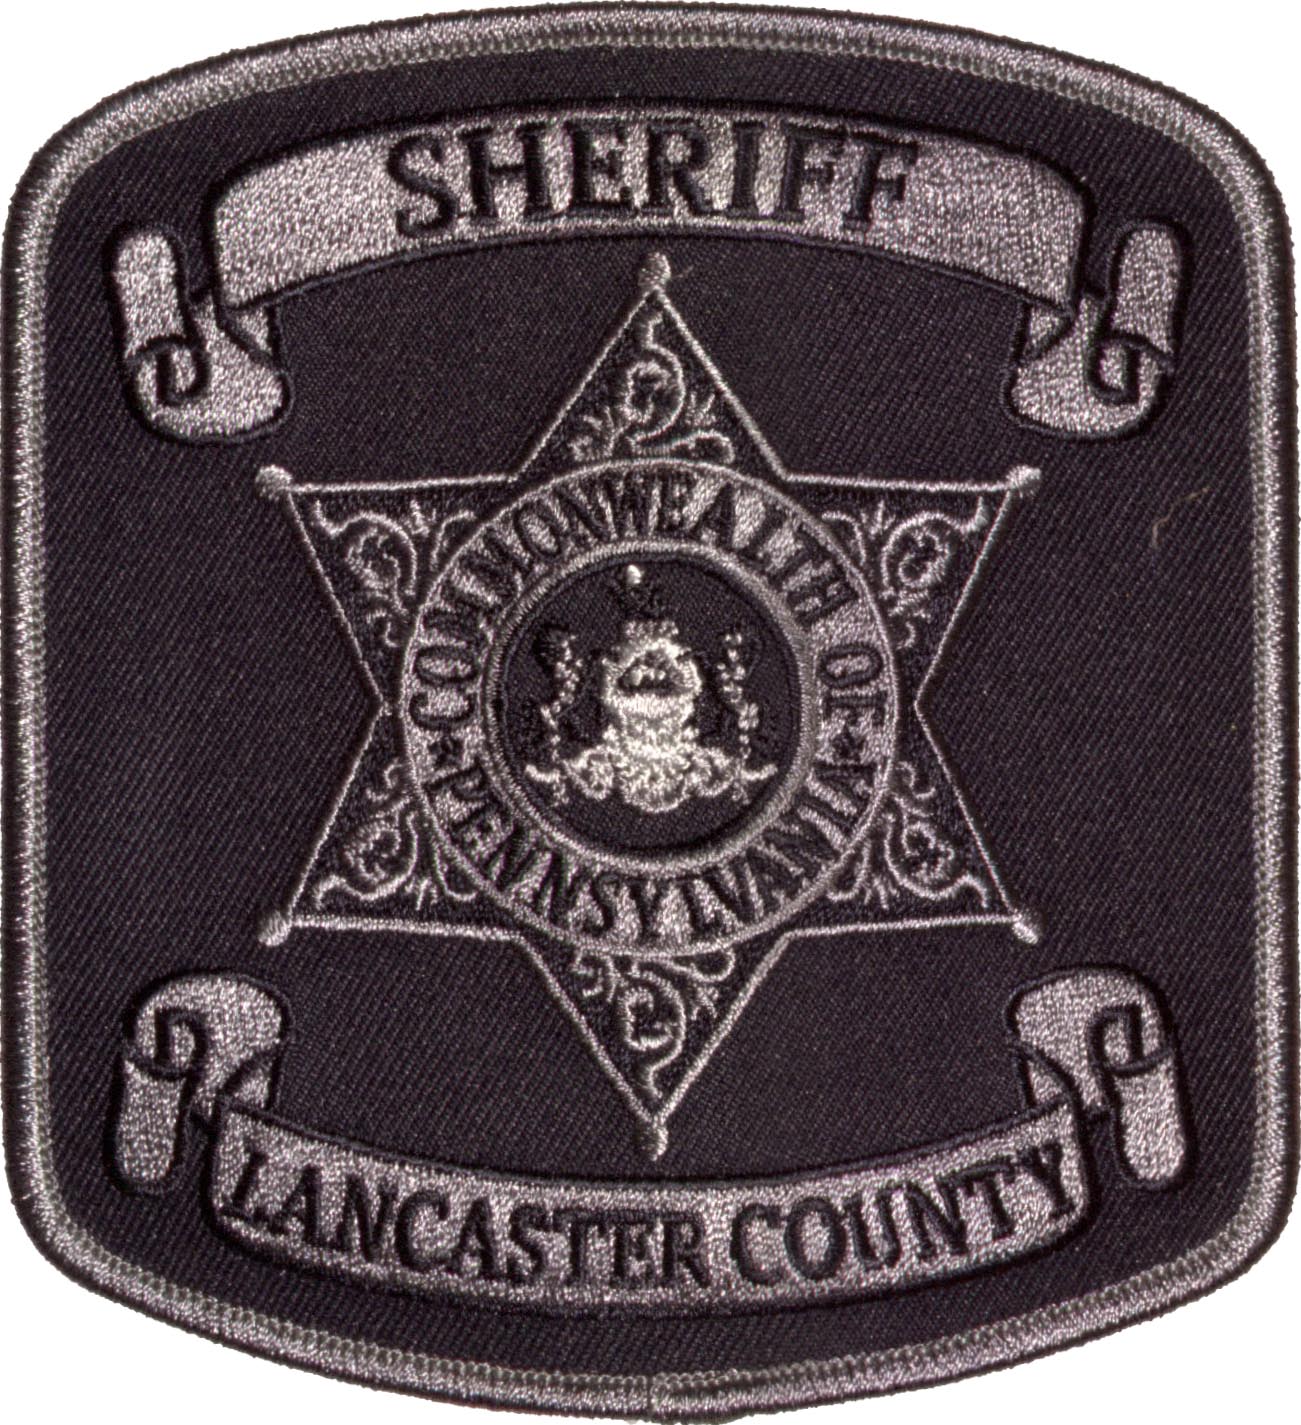 Sheriff Emblems